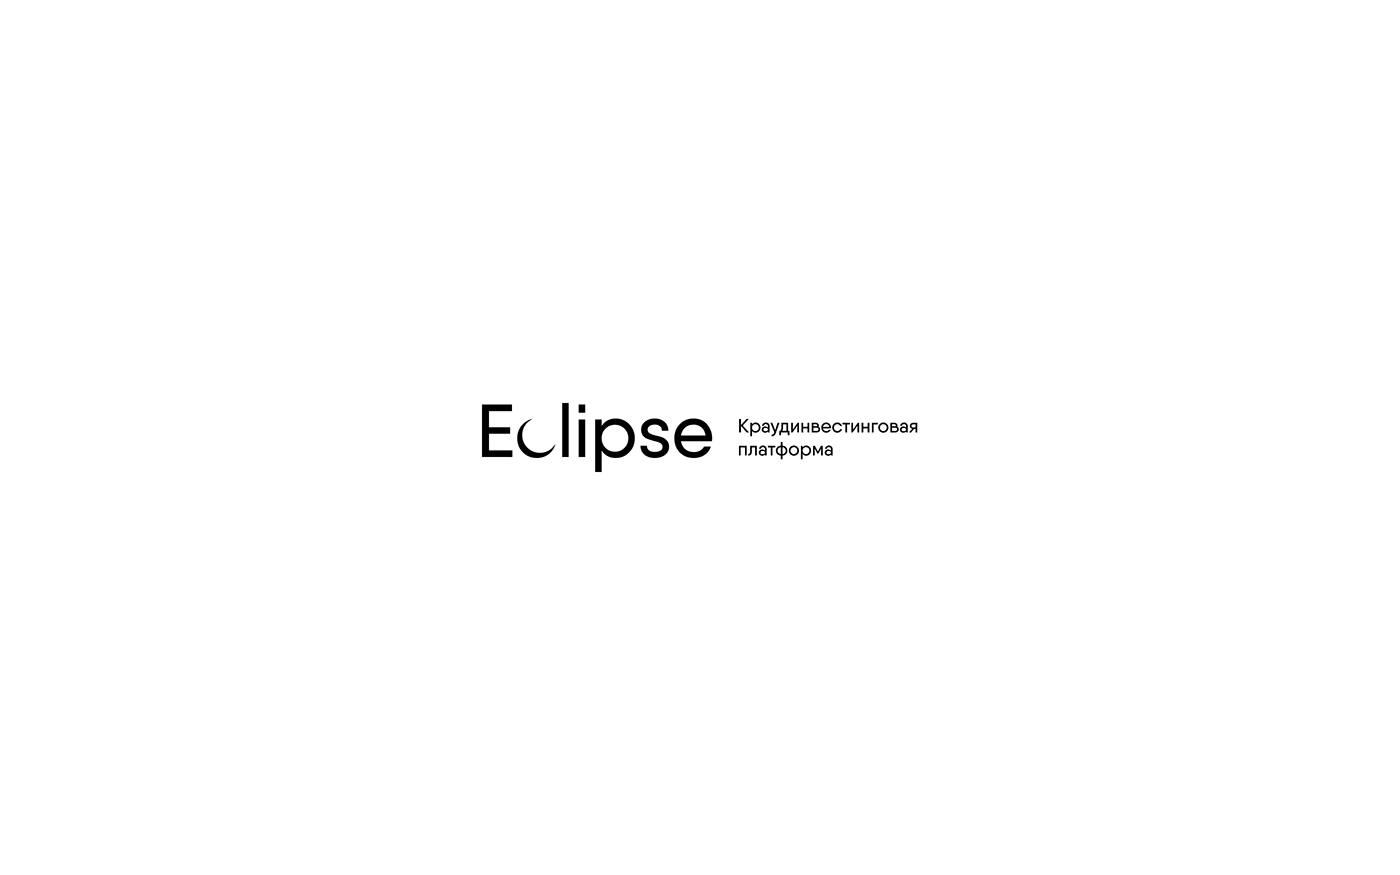 logo Logotype eclipse font crowdfunding Platform Logo Design logos brand identity Crowdinvesting